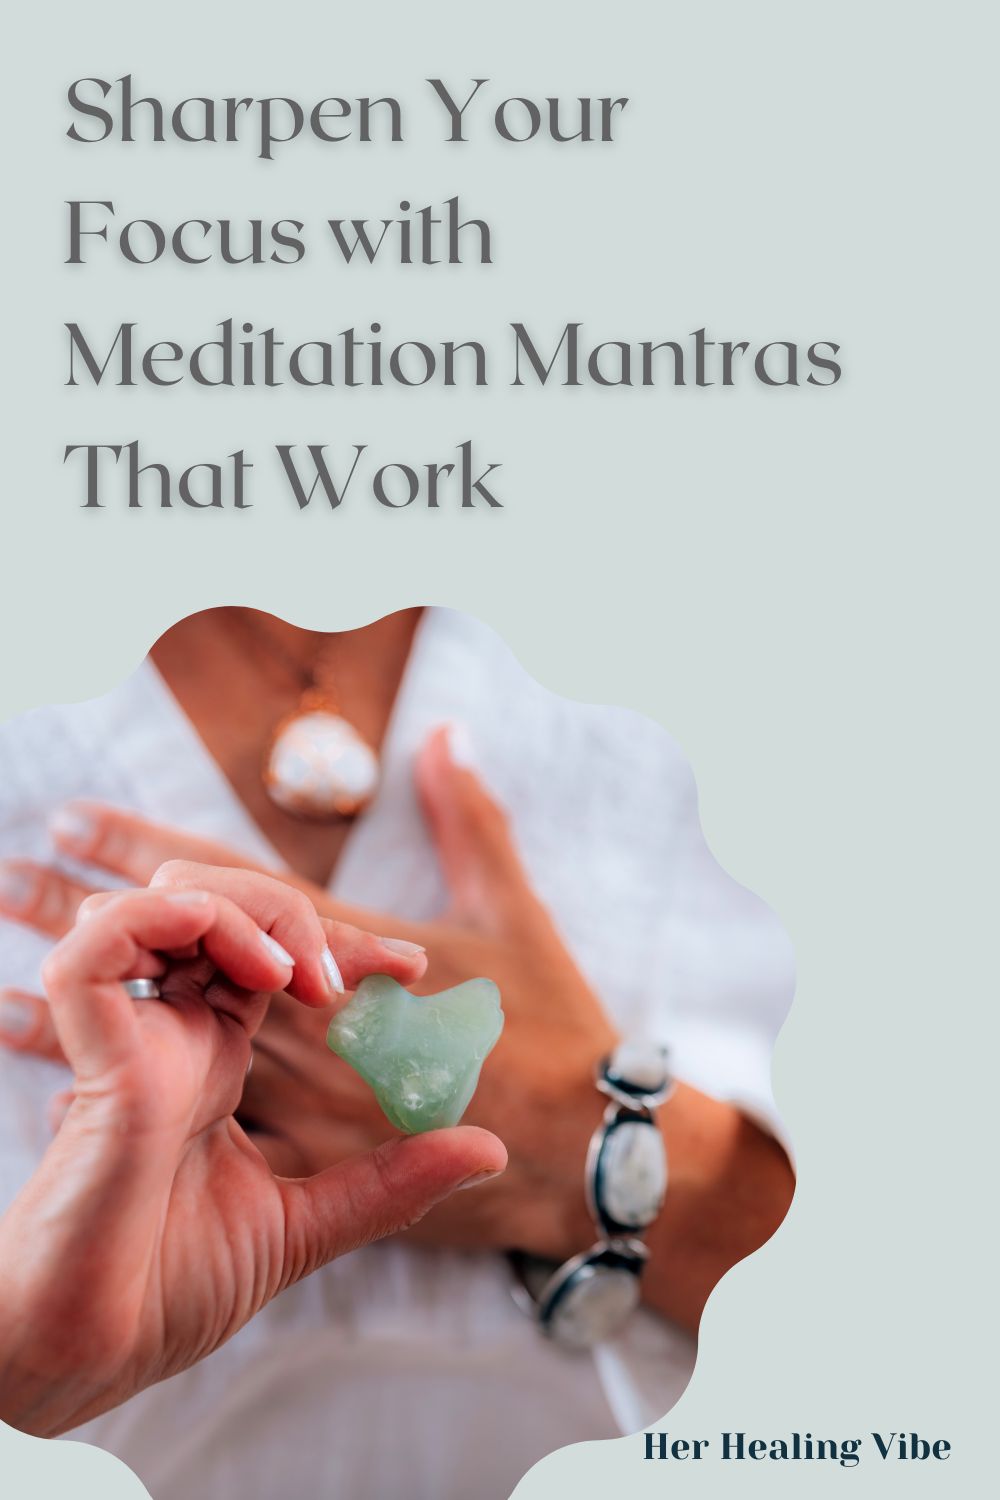 meditation mantras that work